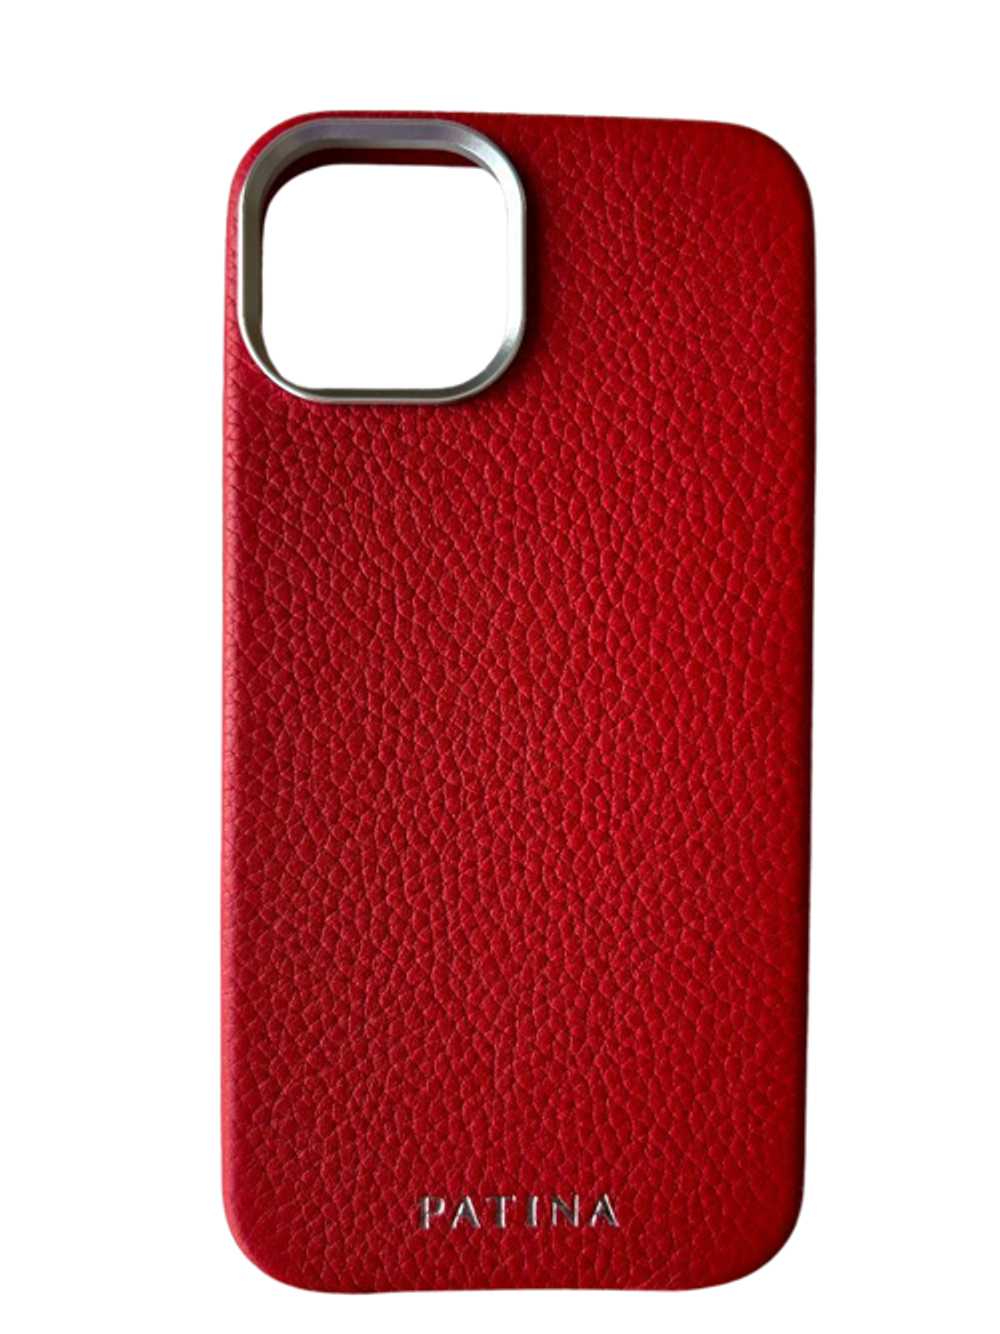 Portland Leather Leather iPhone Case - image 3